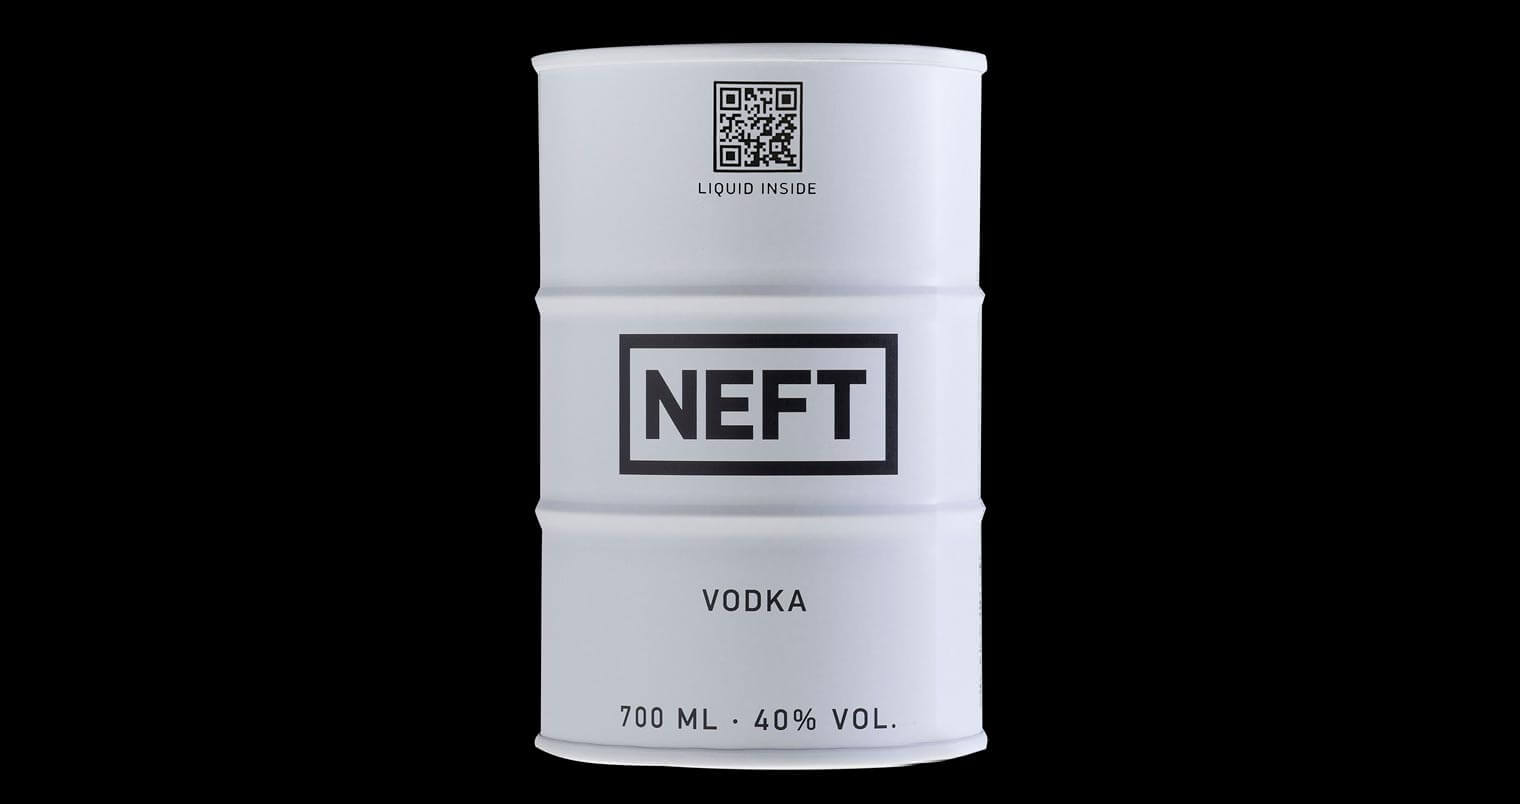 NEFT Vodka, white barrel on black featured image